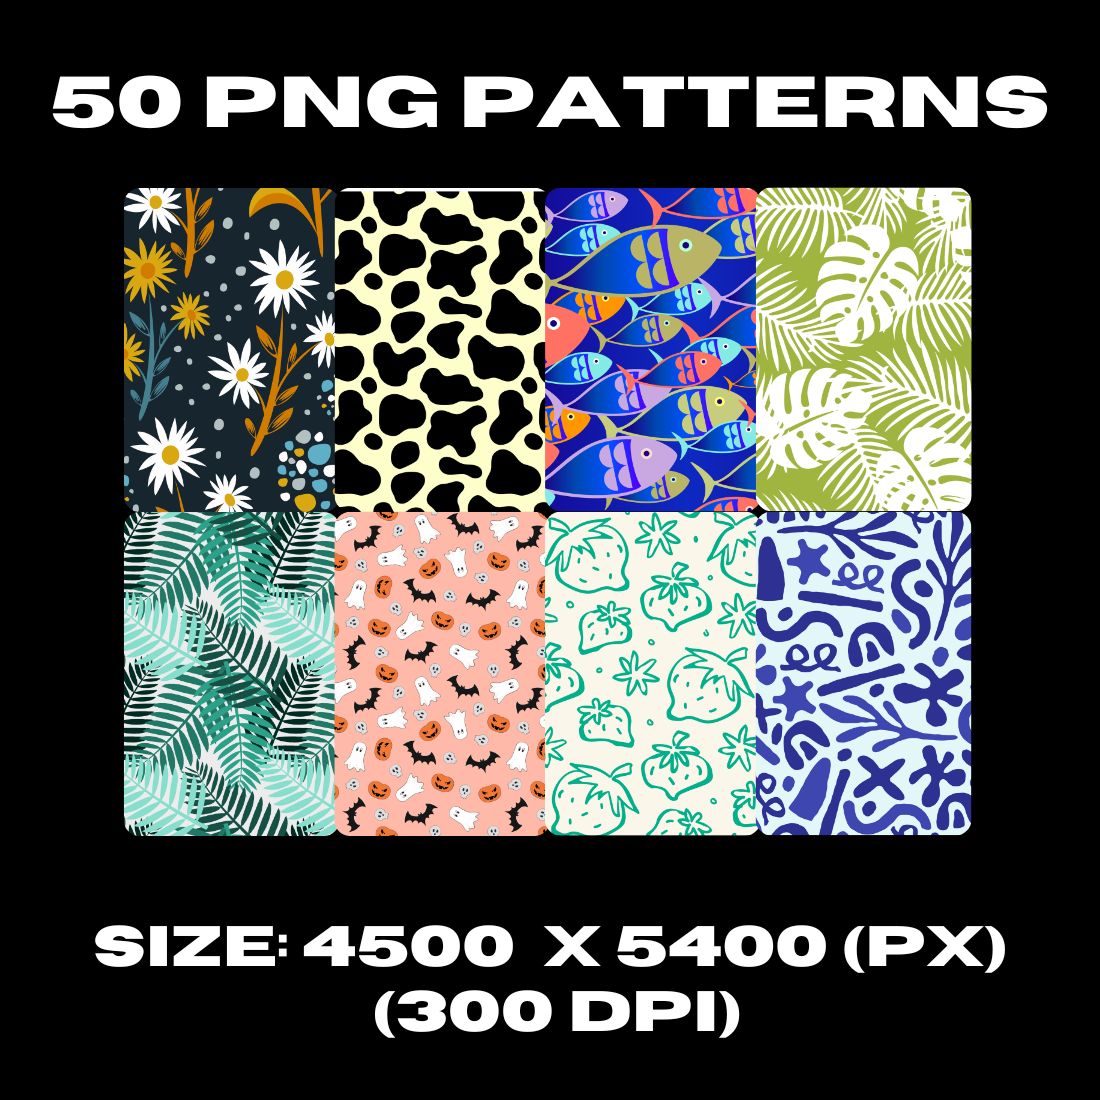 50 Graphic pattern design bundle for POD cover image.